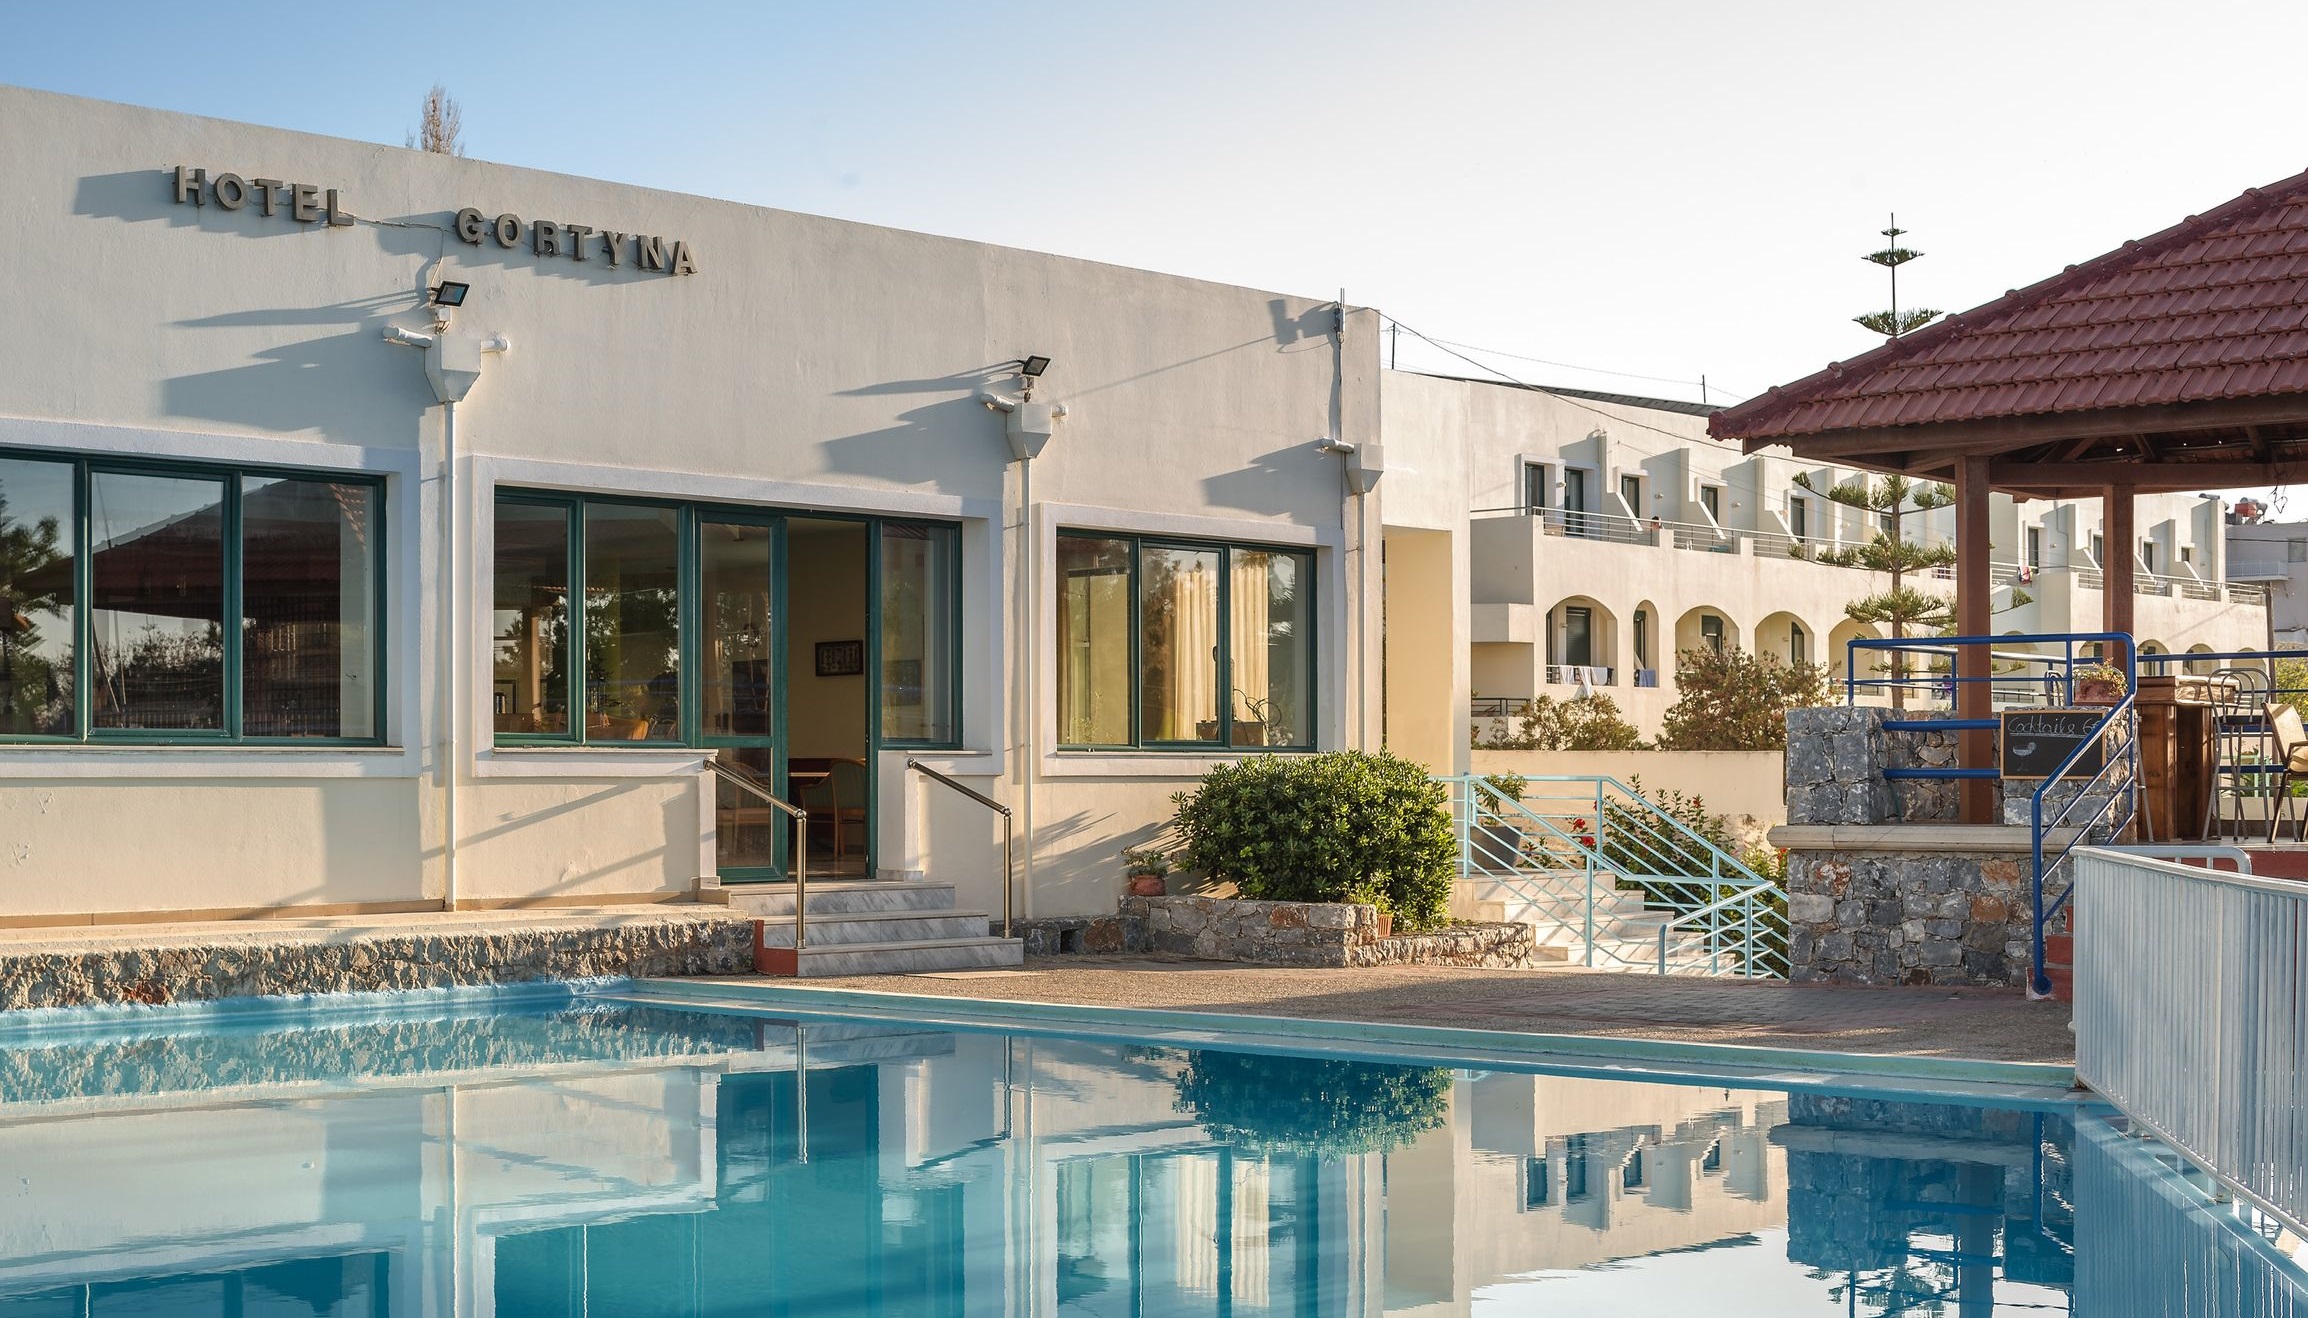 Gortyna Hotel - Ρέθυμνο, Κρήτη ✦ 2 Ημέρες (1 Διανυκτέρευση) ✦ 2 άτομα ✦ 2 ✦ έως 30/09/2022 ✦ Μοναδική Τοποθεσία!